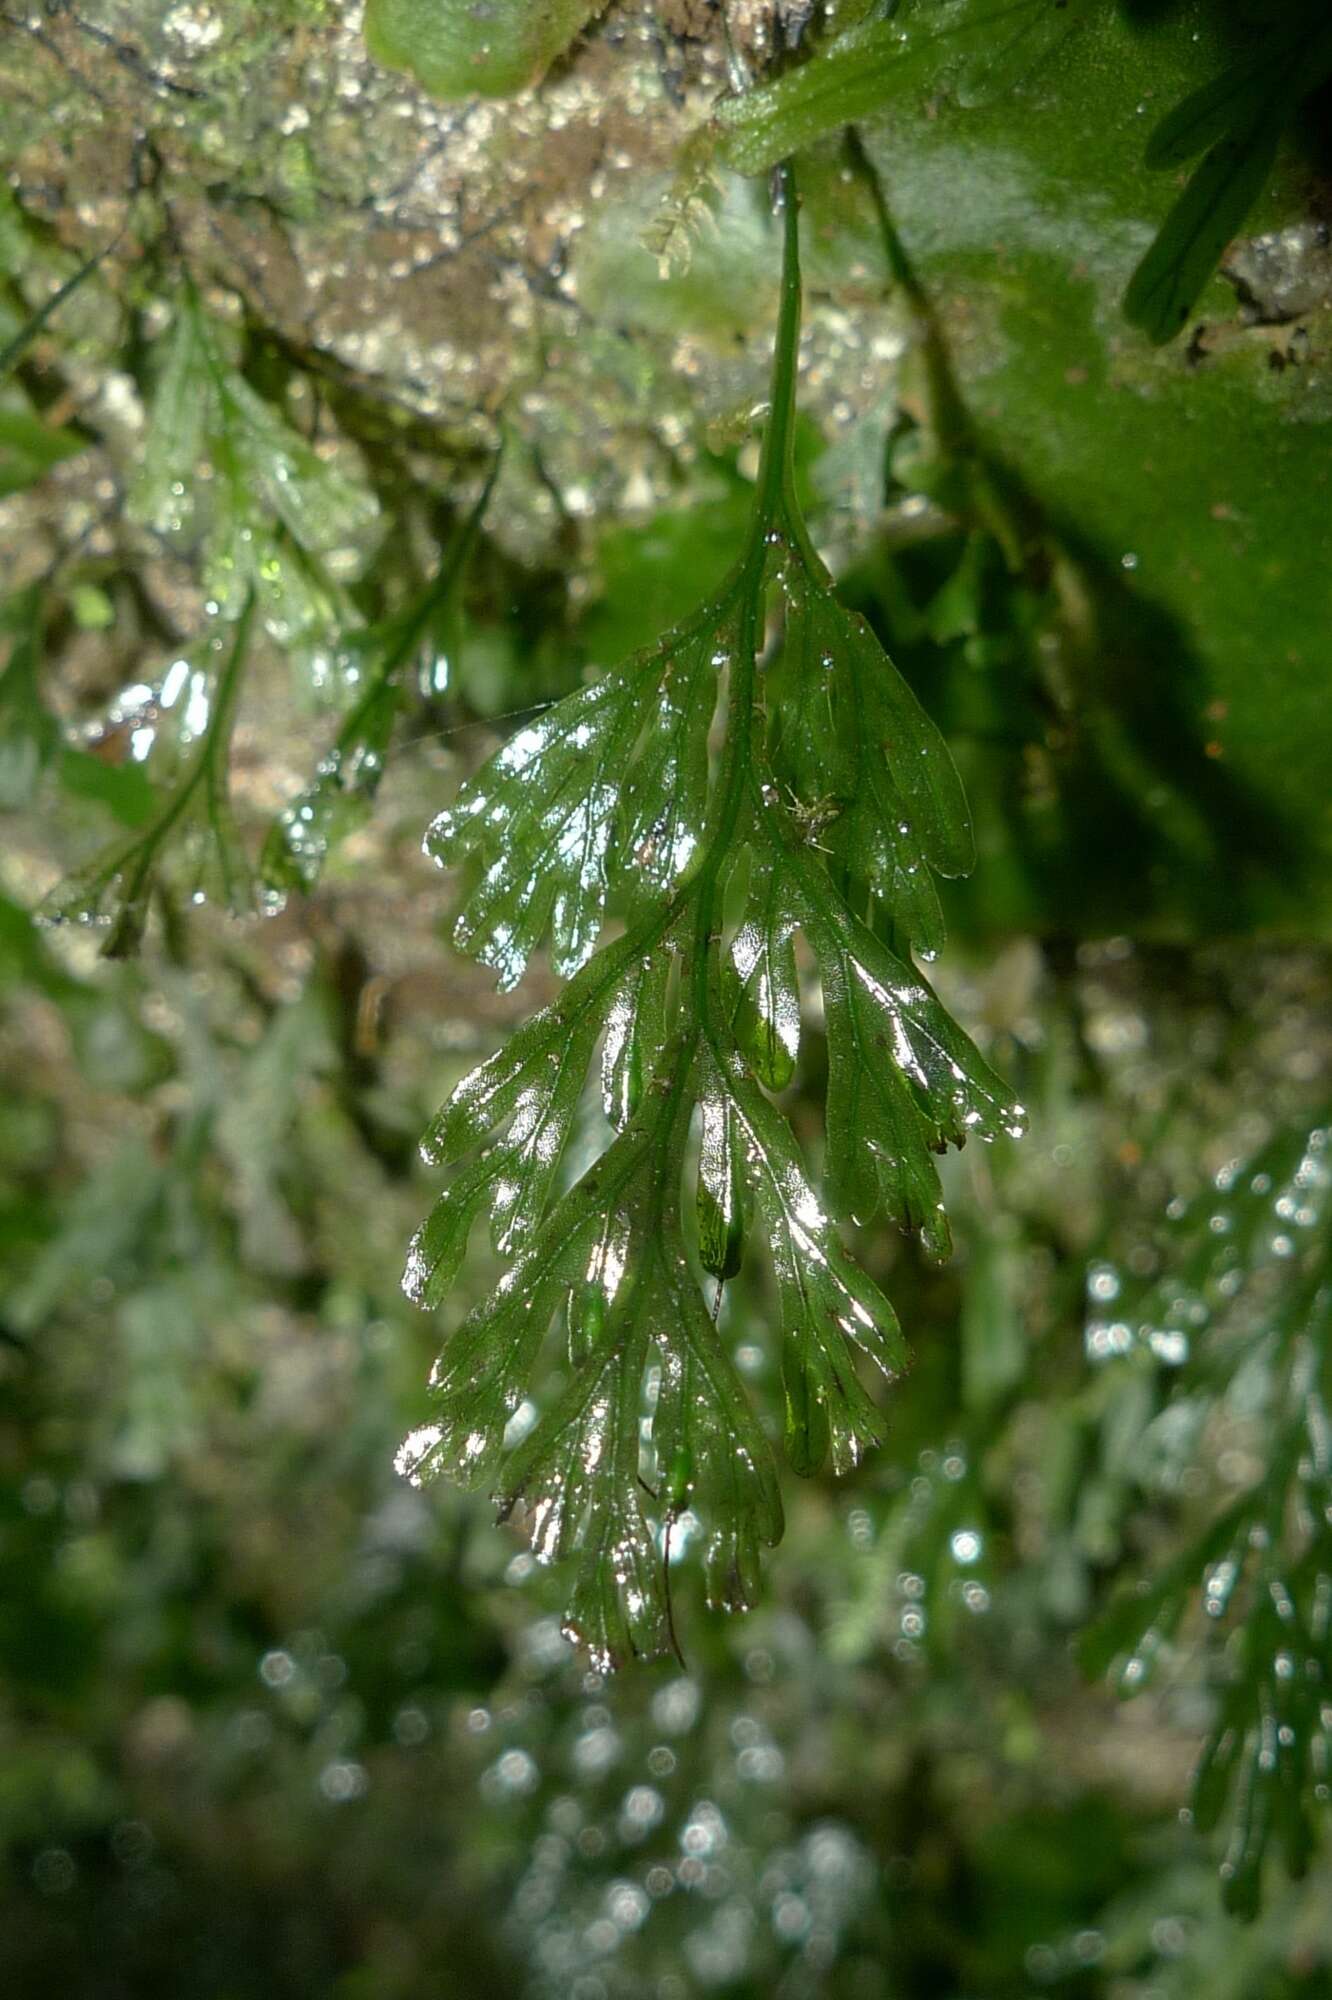 Image of Polyphlebium endlicherianum (C. Presl) Ebihara & K. Iwats.